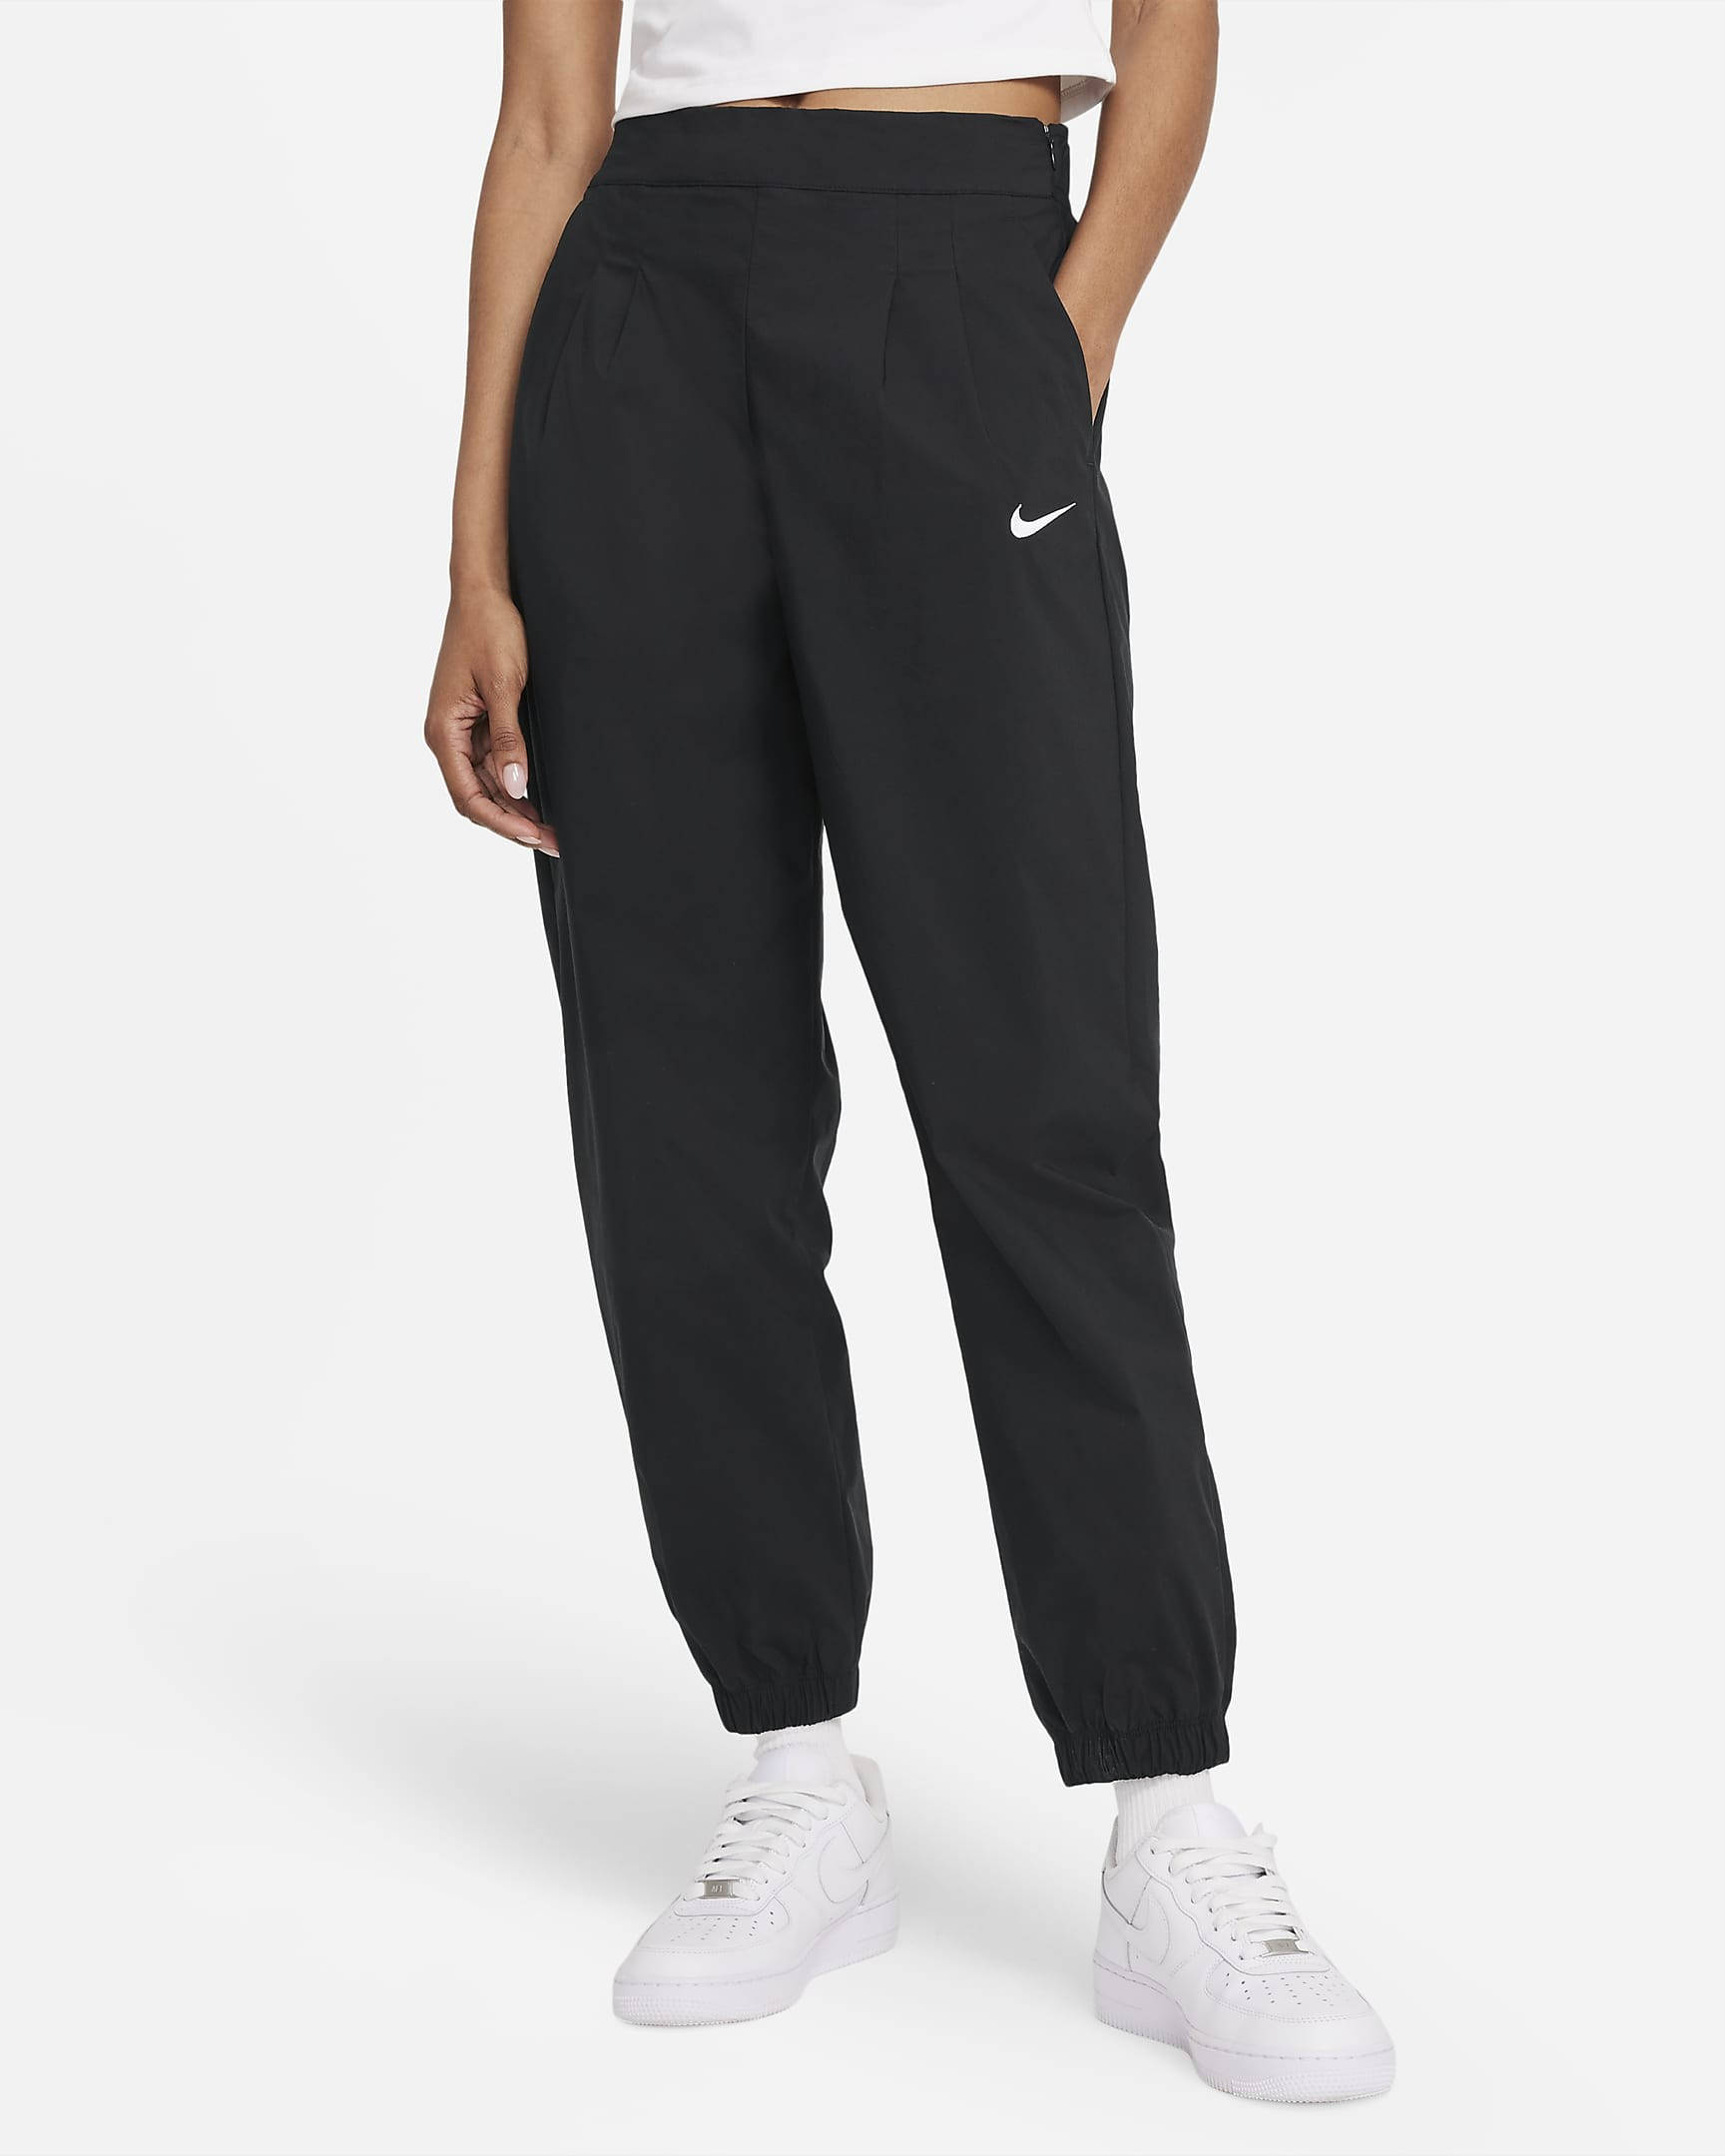 Nike Sportswear Icon Clash Trousers - Black | The Sole Supplier